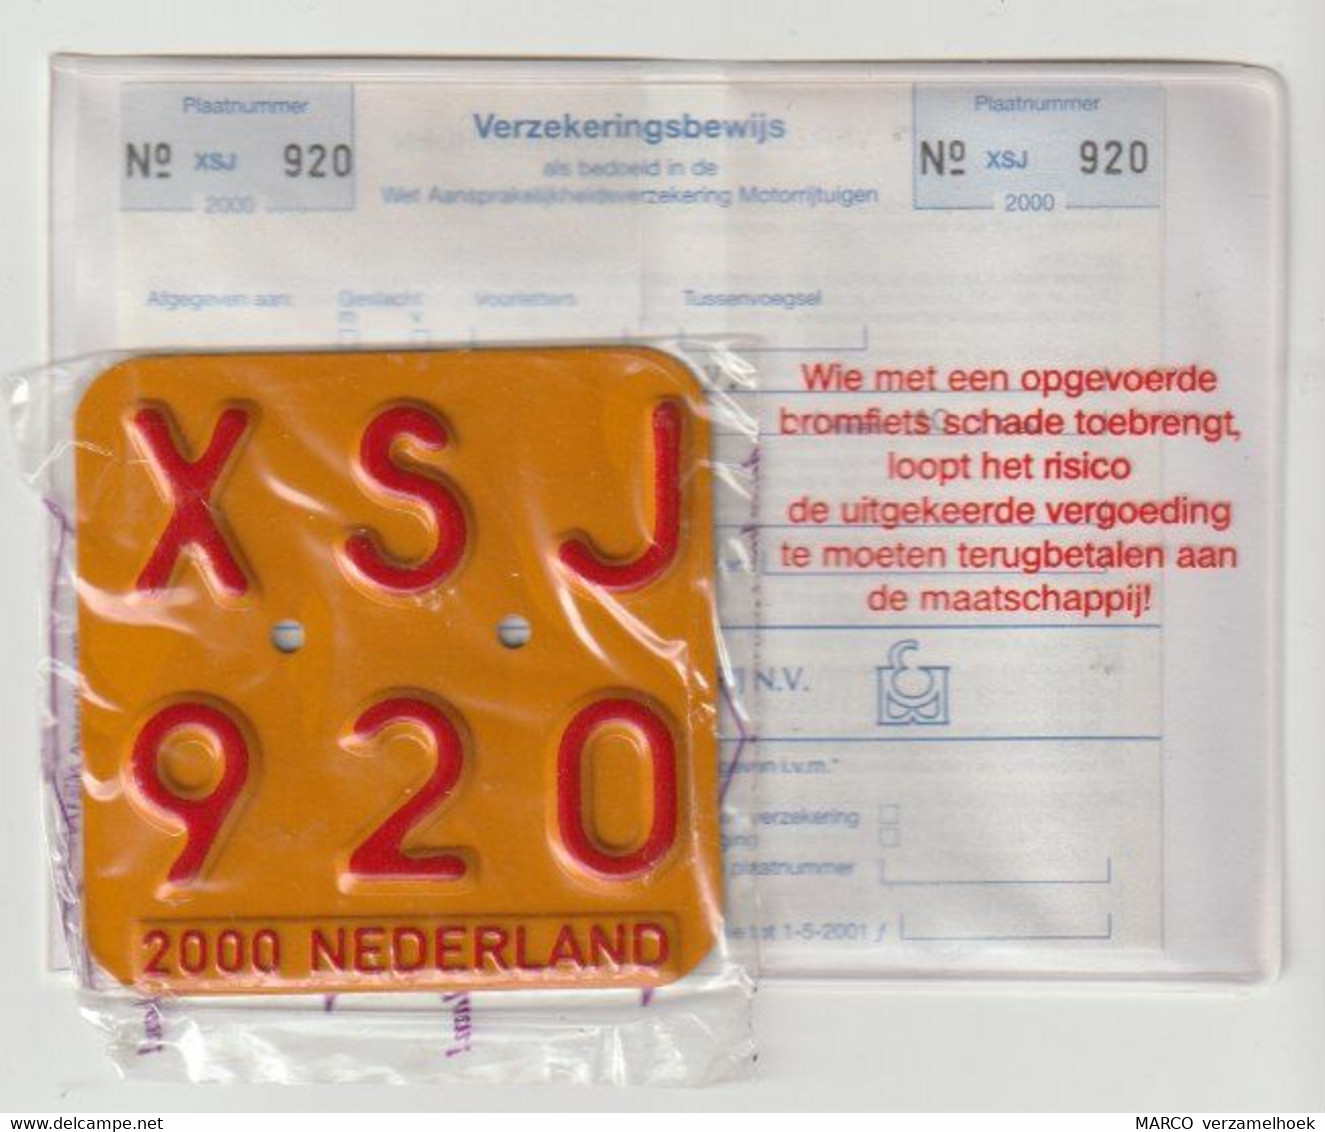 License Plate-nummerplaat-Nummernschild Moped-wheelchair Nederland-the Netherlands 2000 - Number Plates